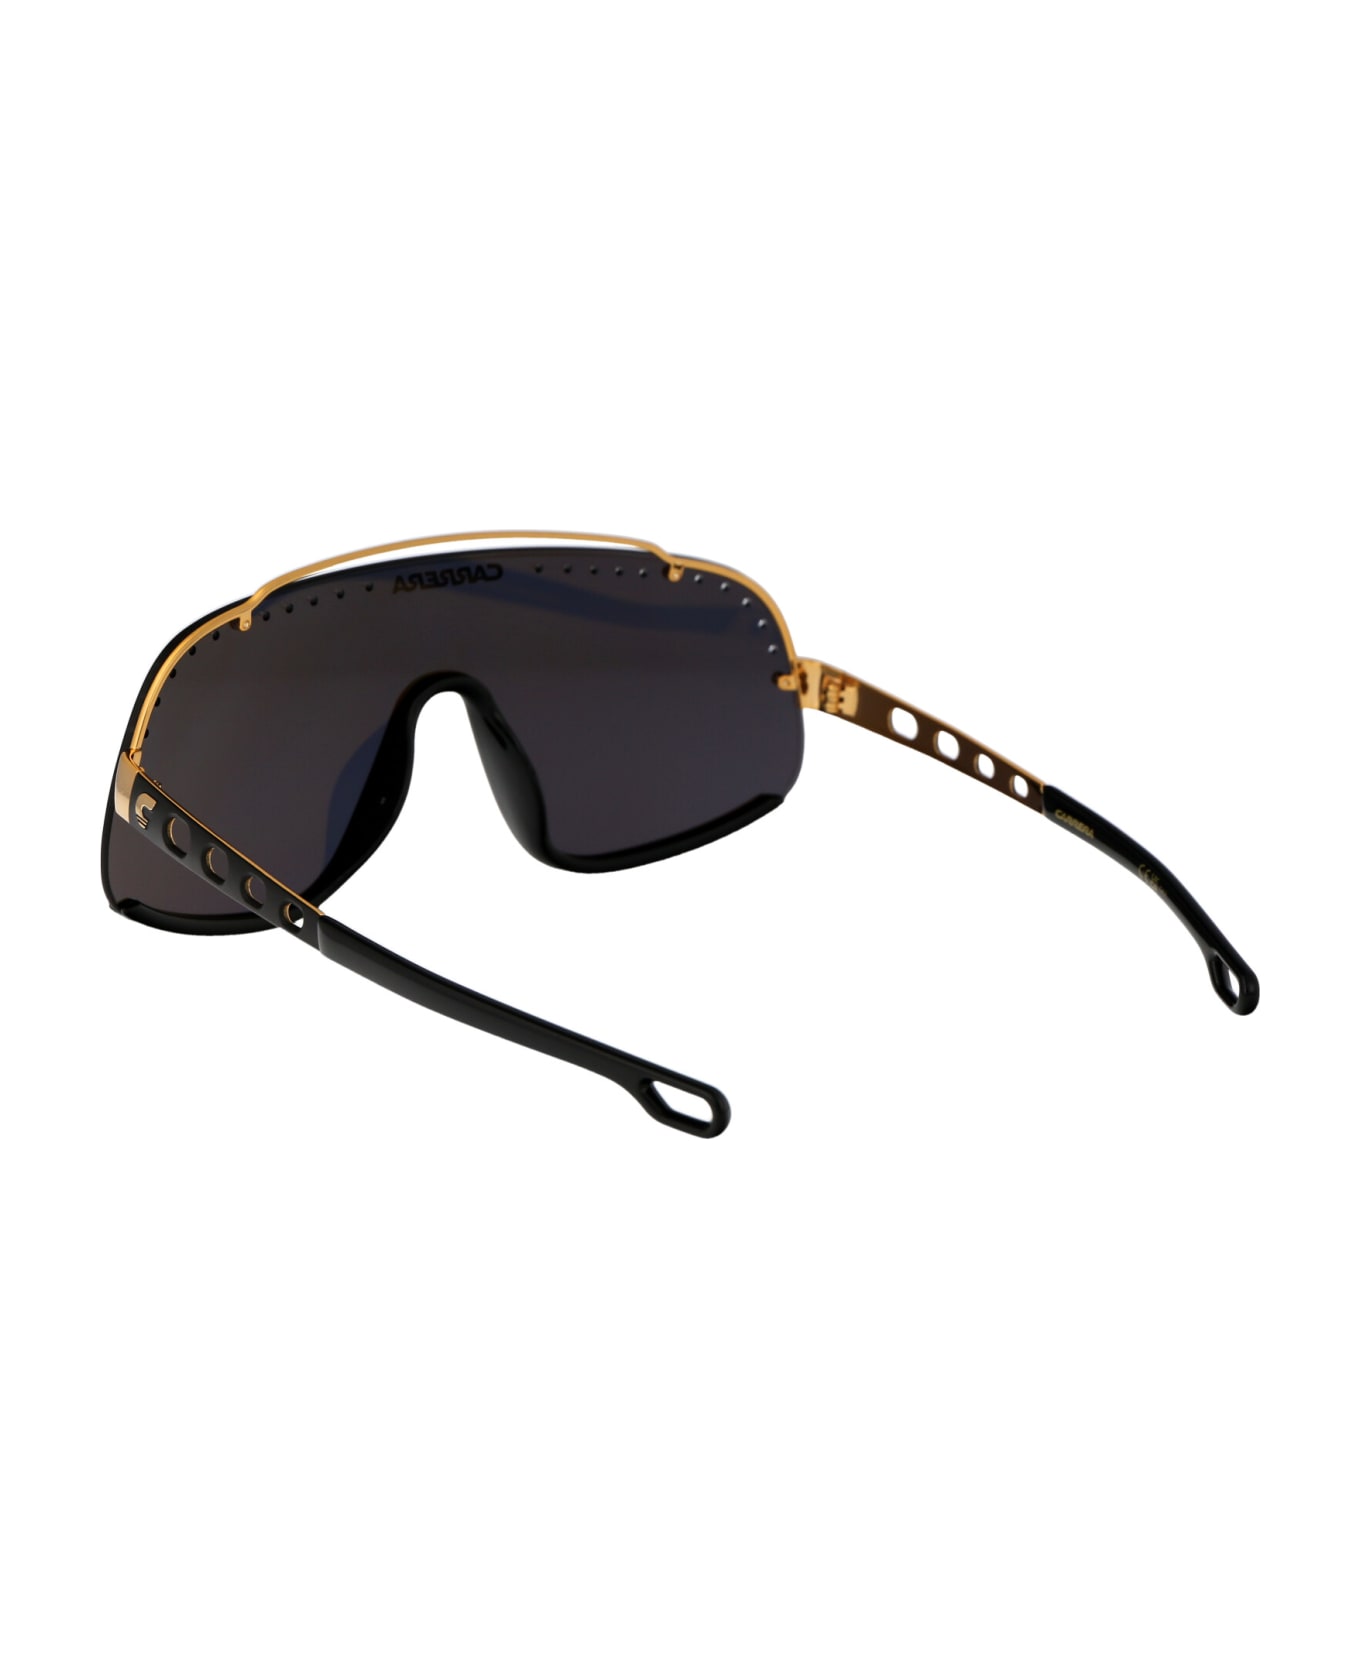 Carrera Flaglab 16 Sunglasses - 2M22K BLK GOLD B サングラス